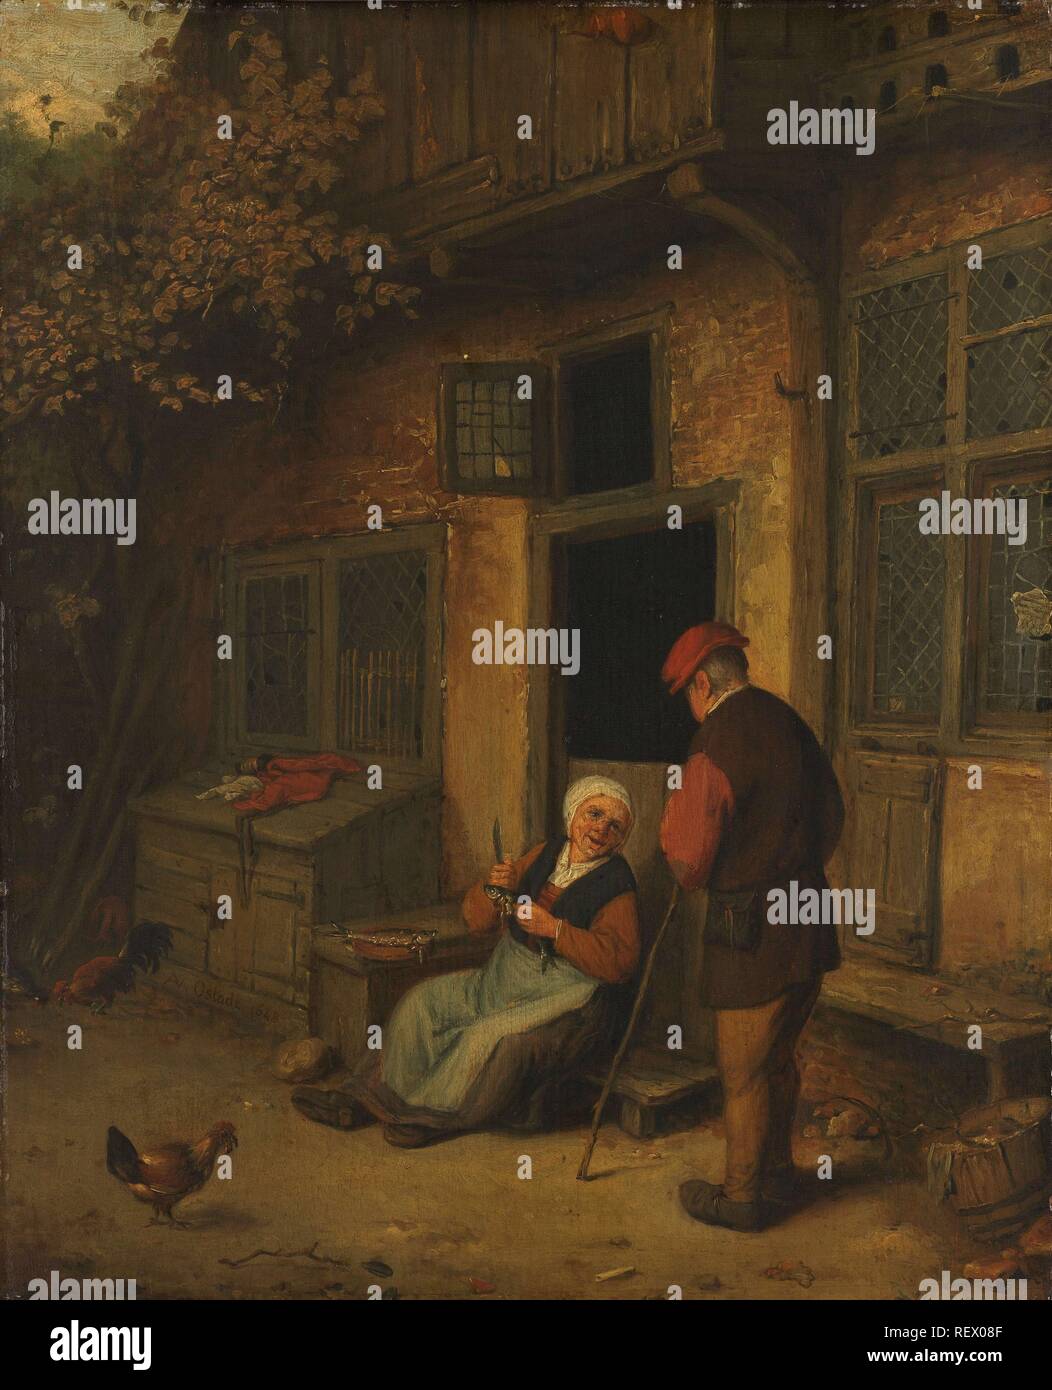 A woman gutting herring in front of her house. Dating: c. 1650 - c. 1700. Measurements: h 40 cm × w 32.3 cm × t 0.6 cm; d 6 cm. Museum: Rijksmuseum, Amsterdam. Author: Adriaen van Ostade (copy after). Stock Photo